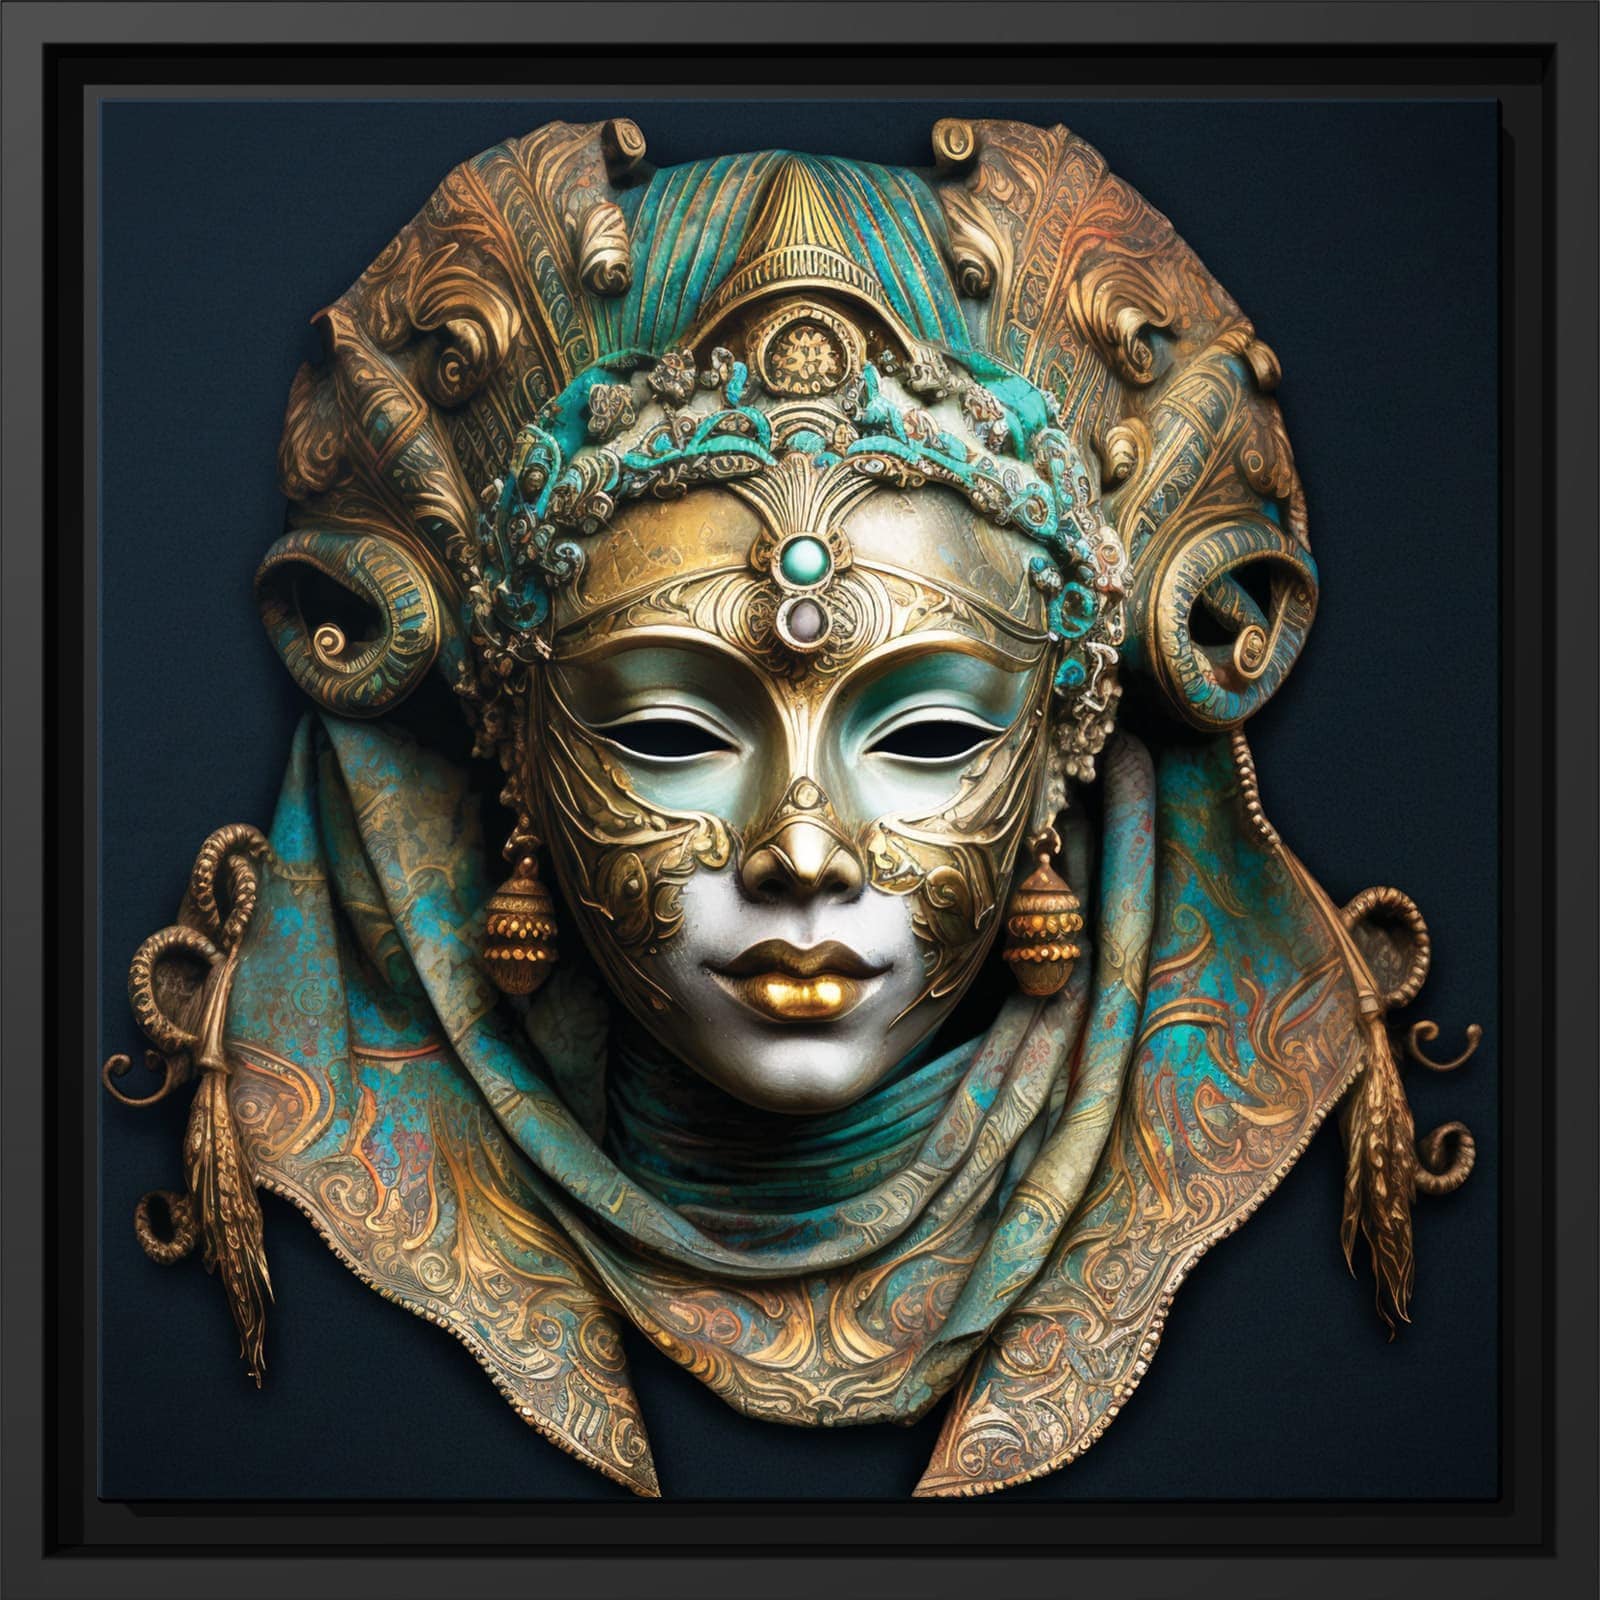 Designer Inspired Face Masks – Heru Cosmetics